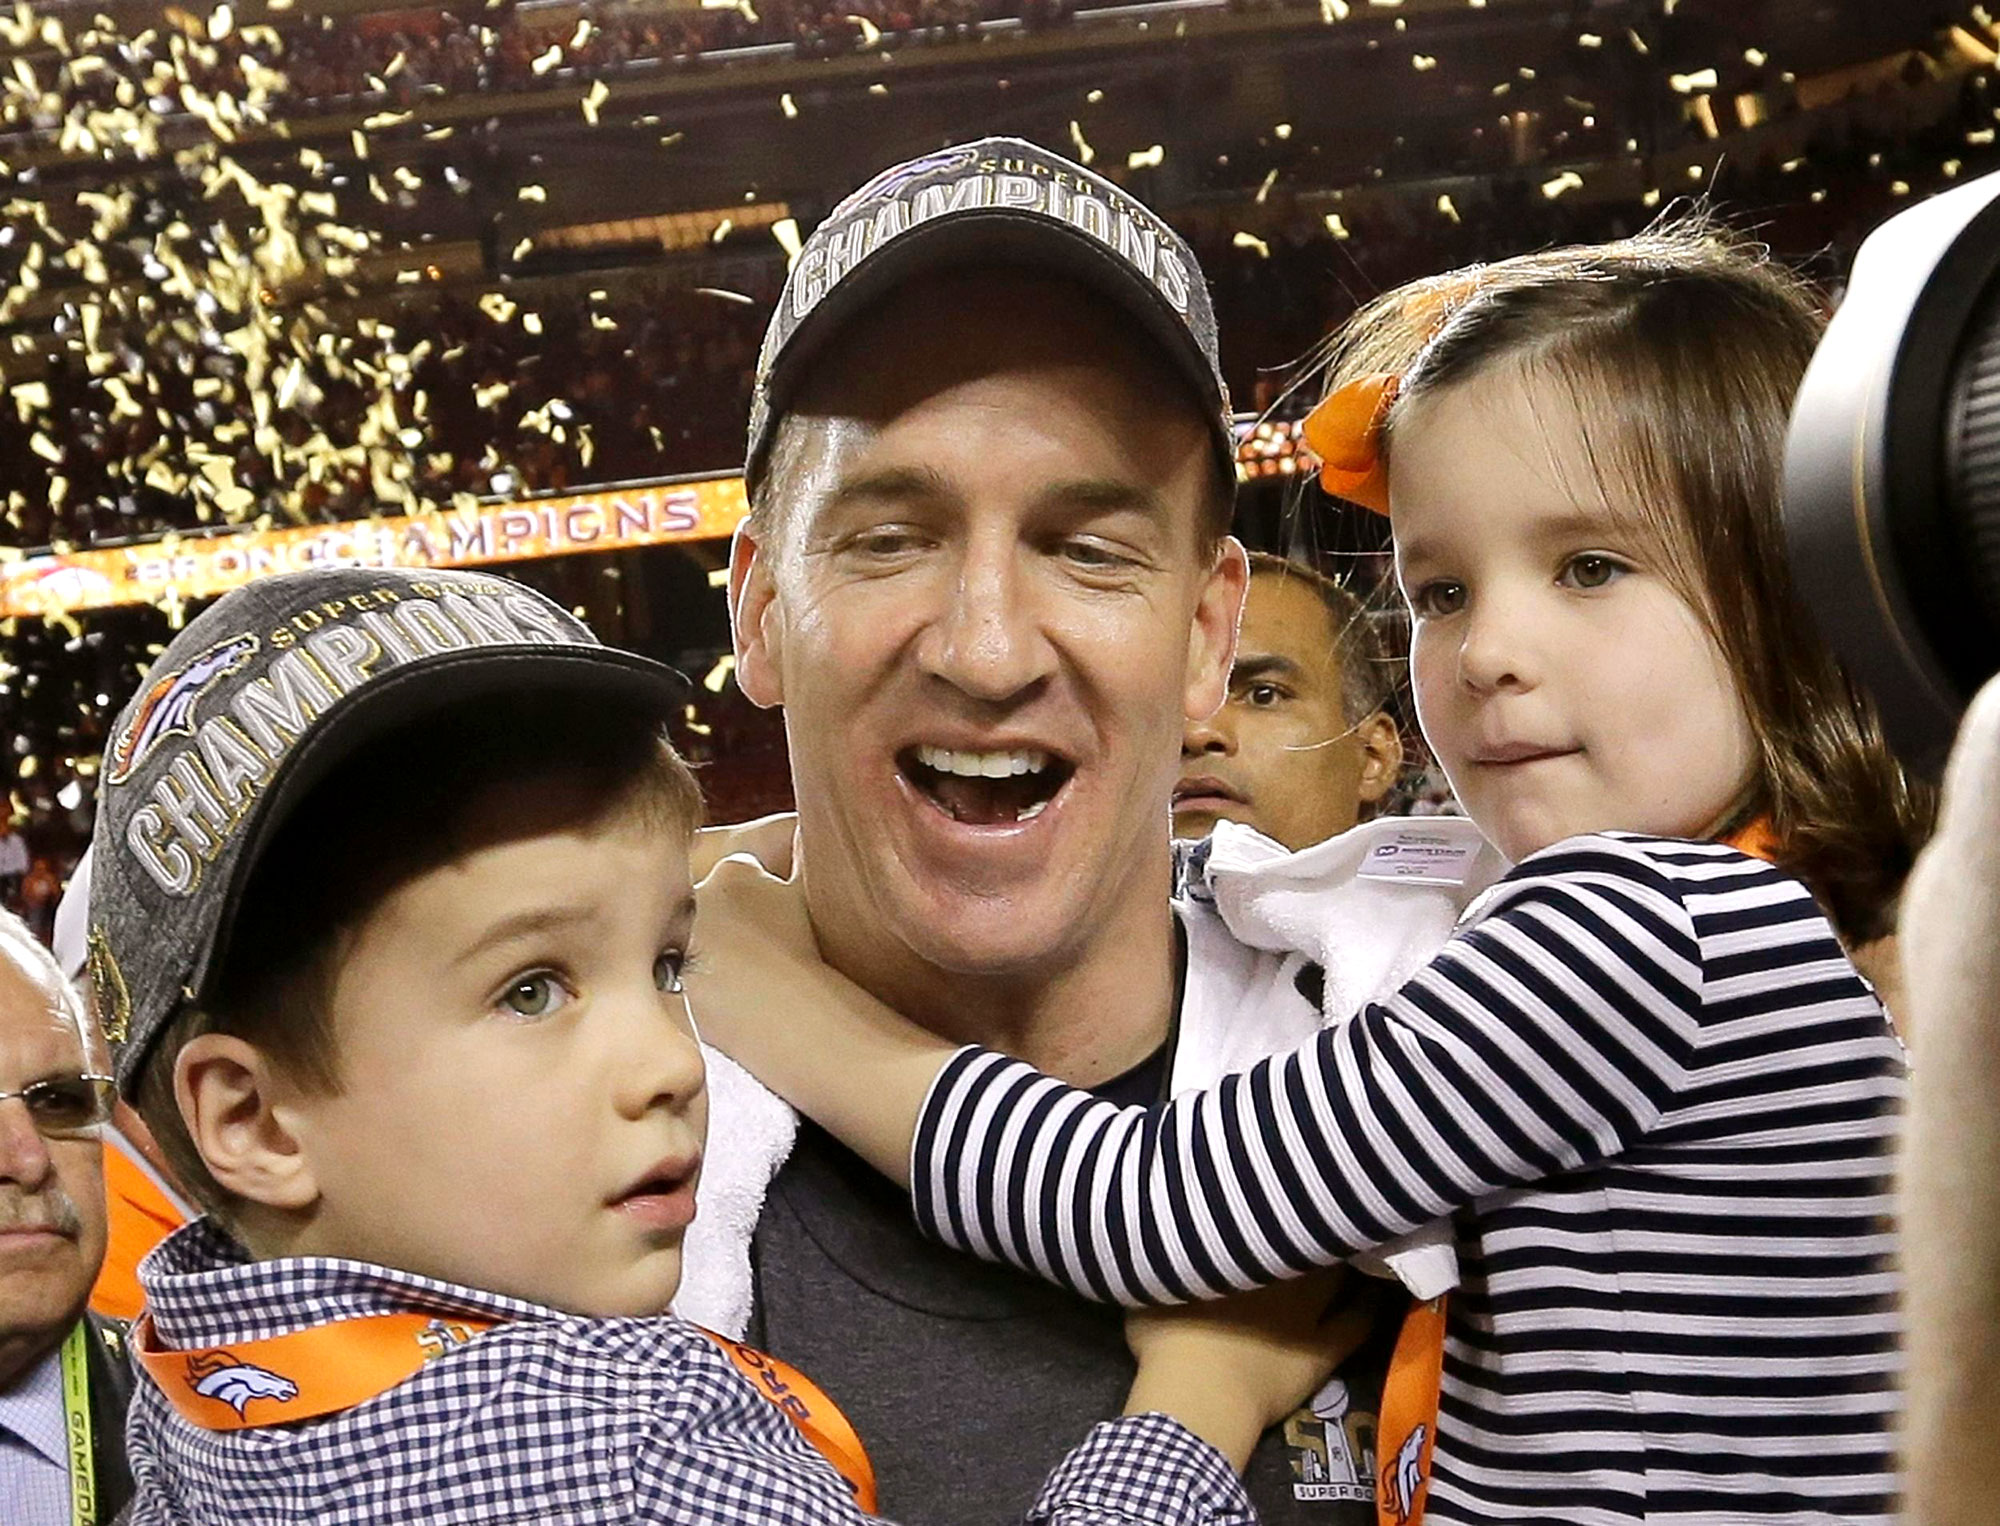 Fotos raras de Eli, Peyton Manning con niños: álbum familiar